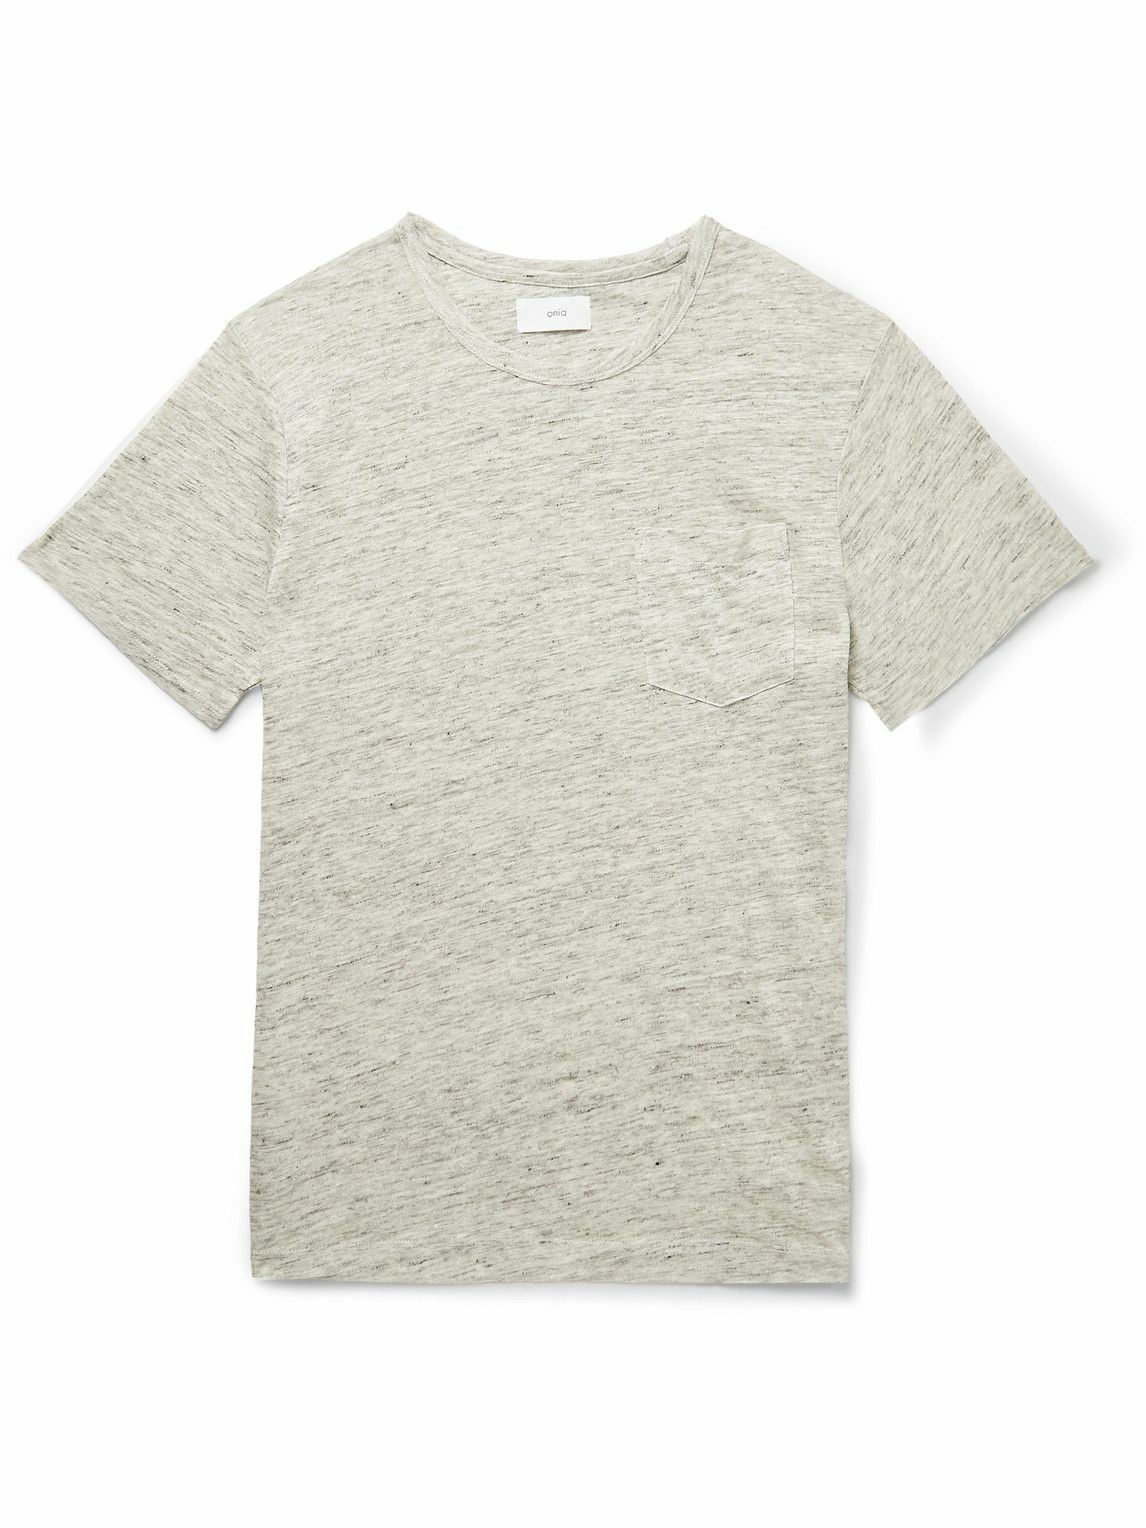 Onia - Linen T-Shirt - Gray Onia